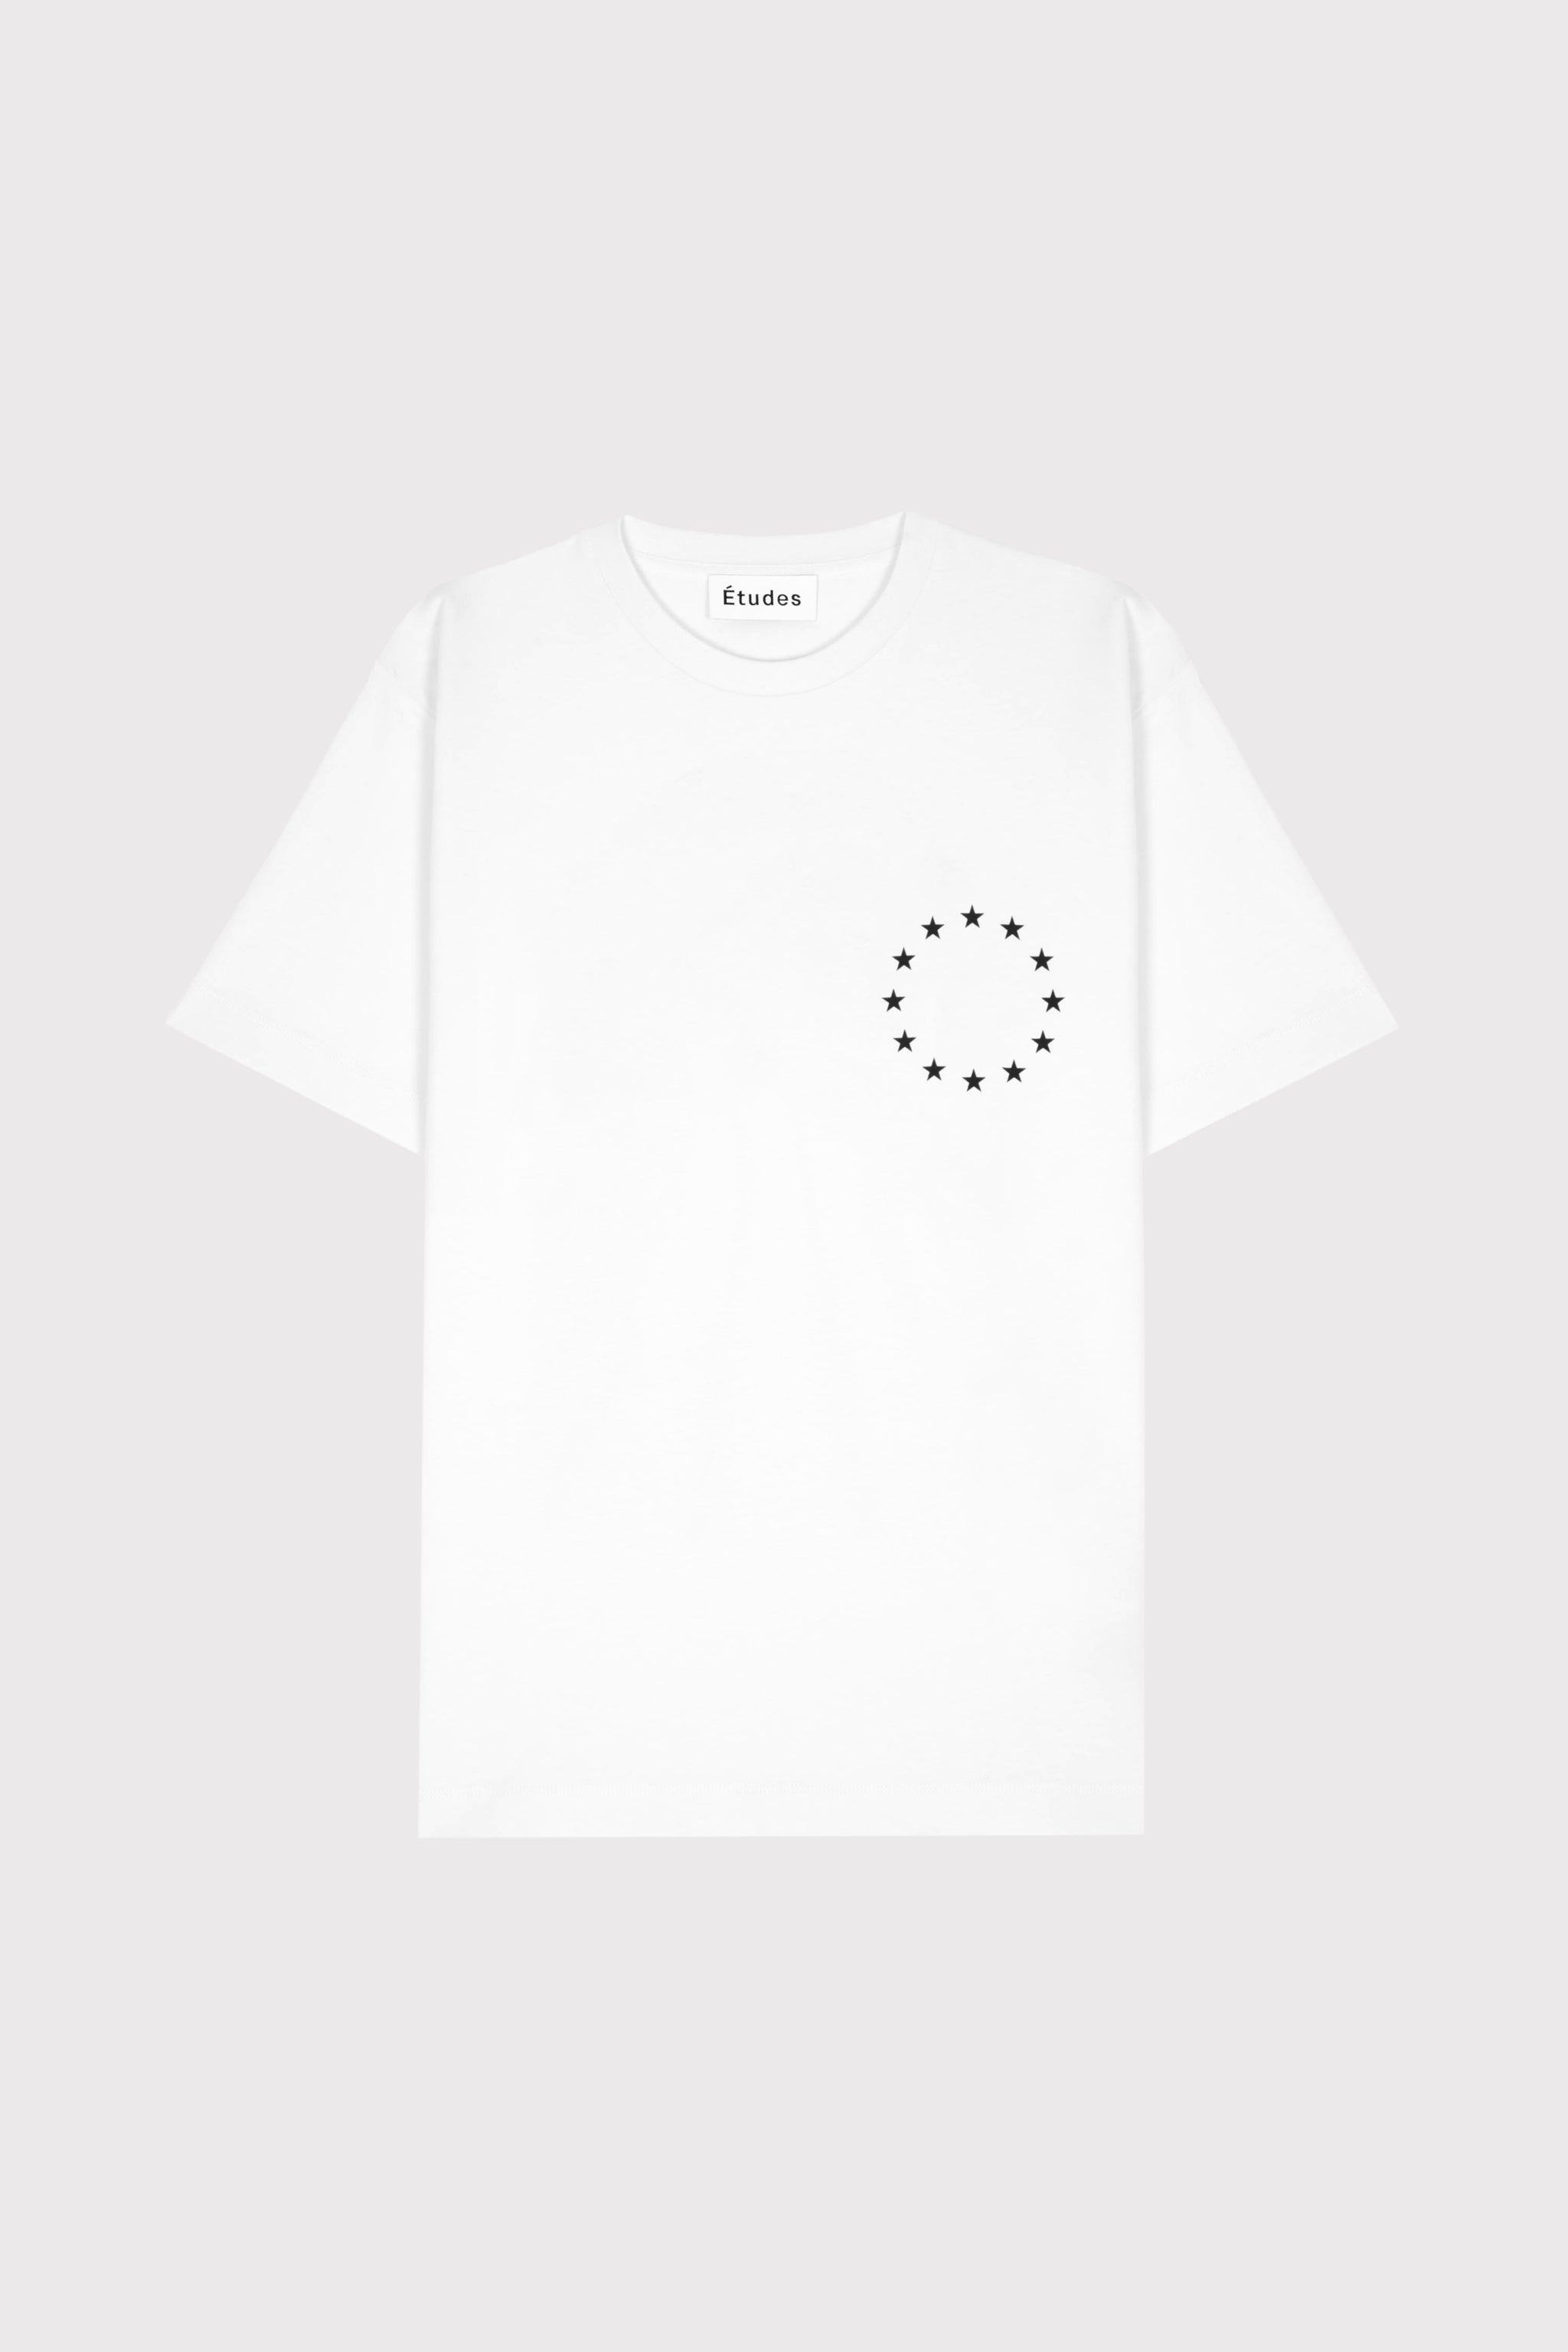 Études WONDER EUROPA BACK WHITE T-shirt 2